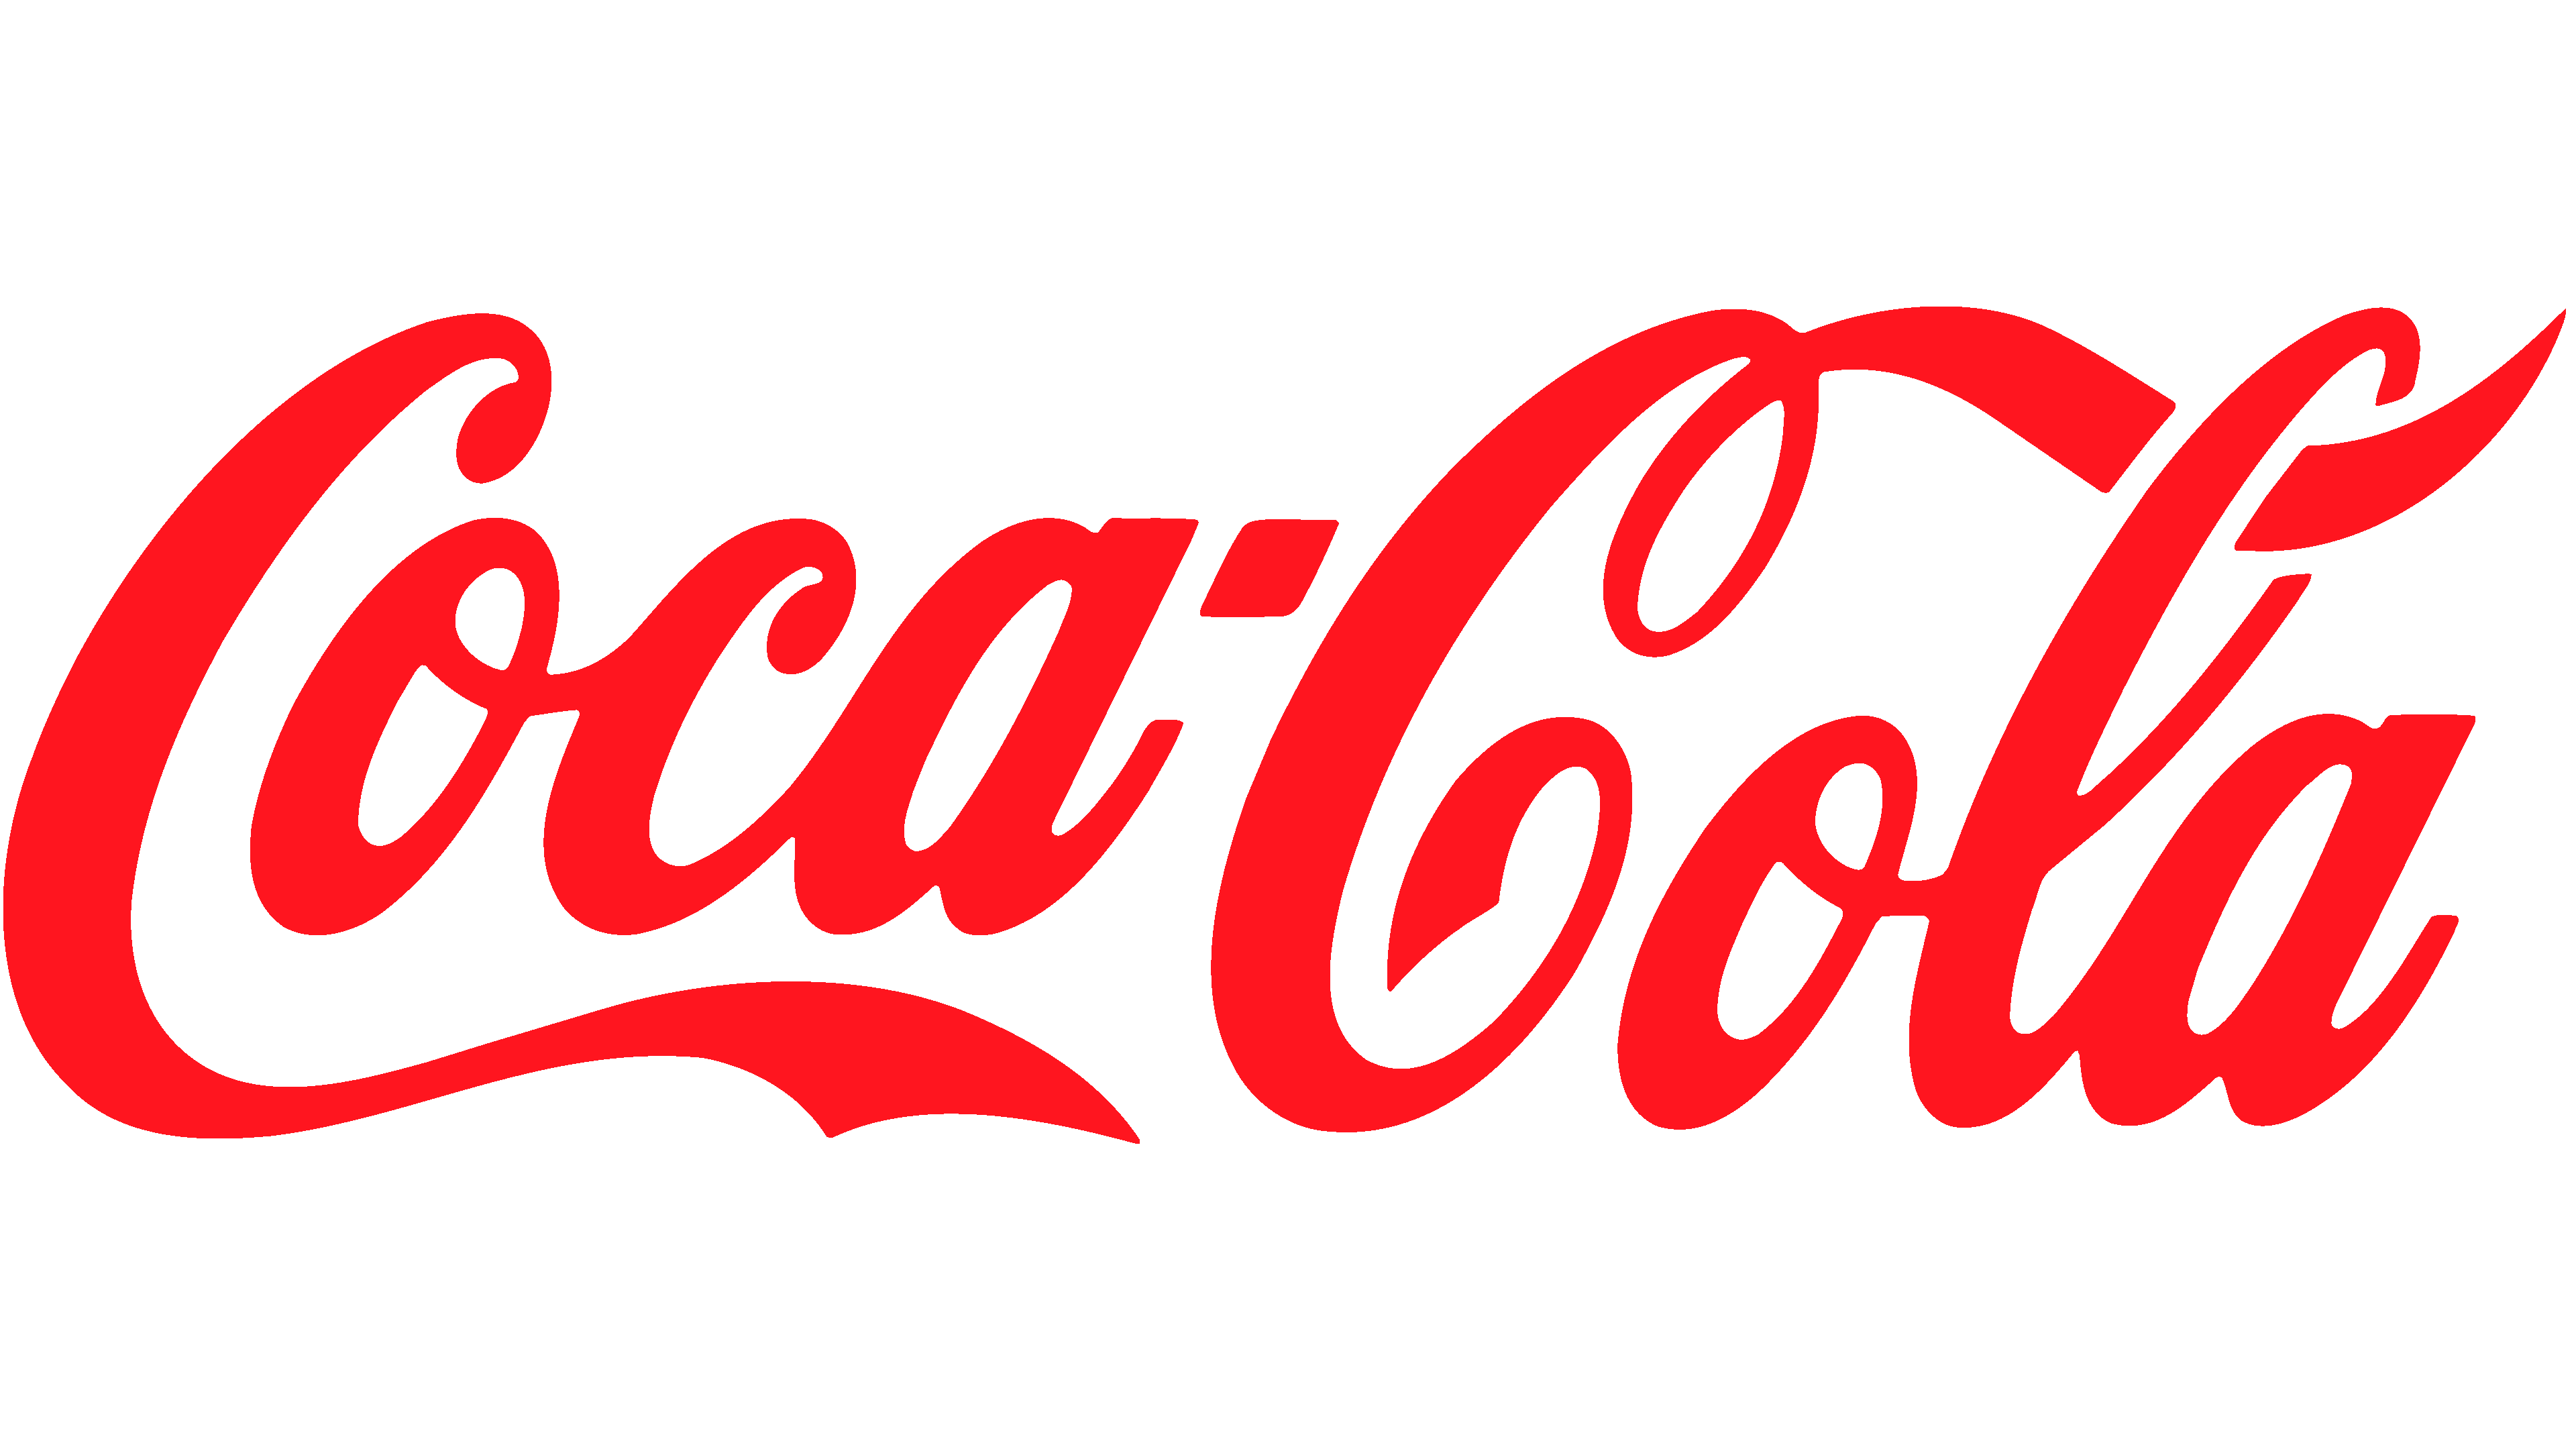 Answering service client - Coca-Cola logo